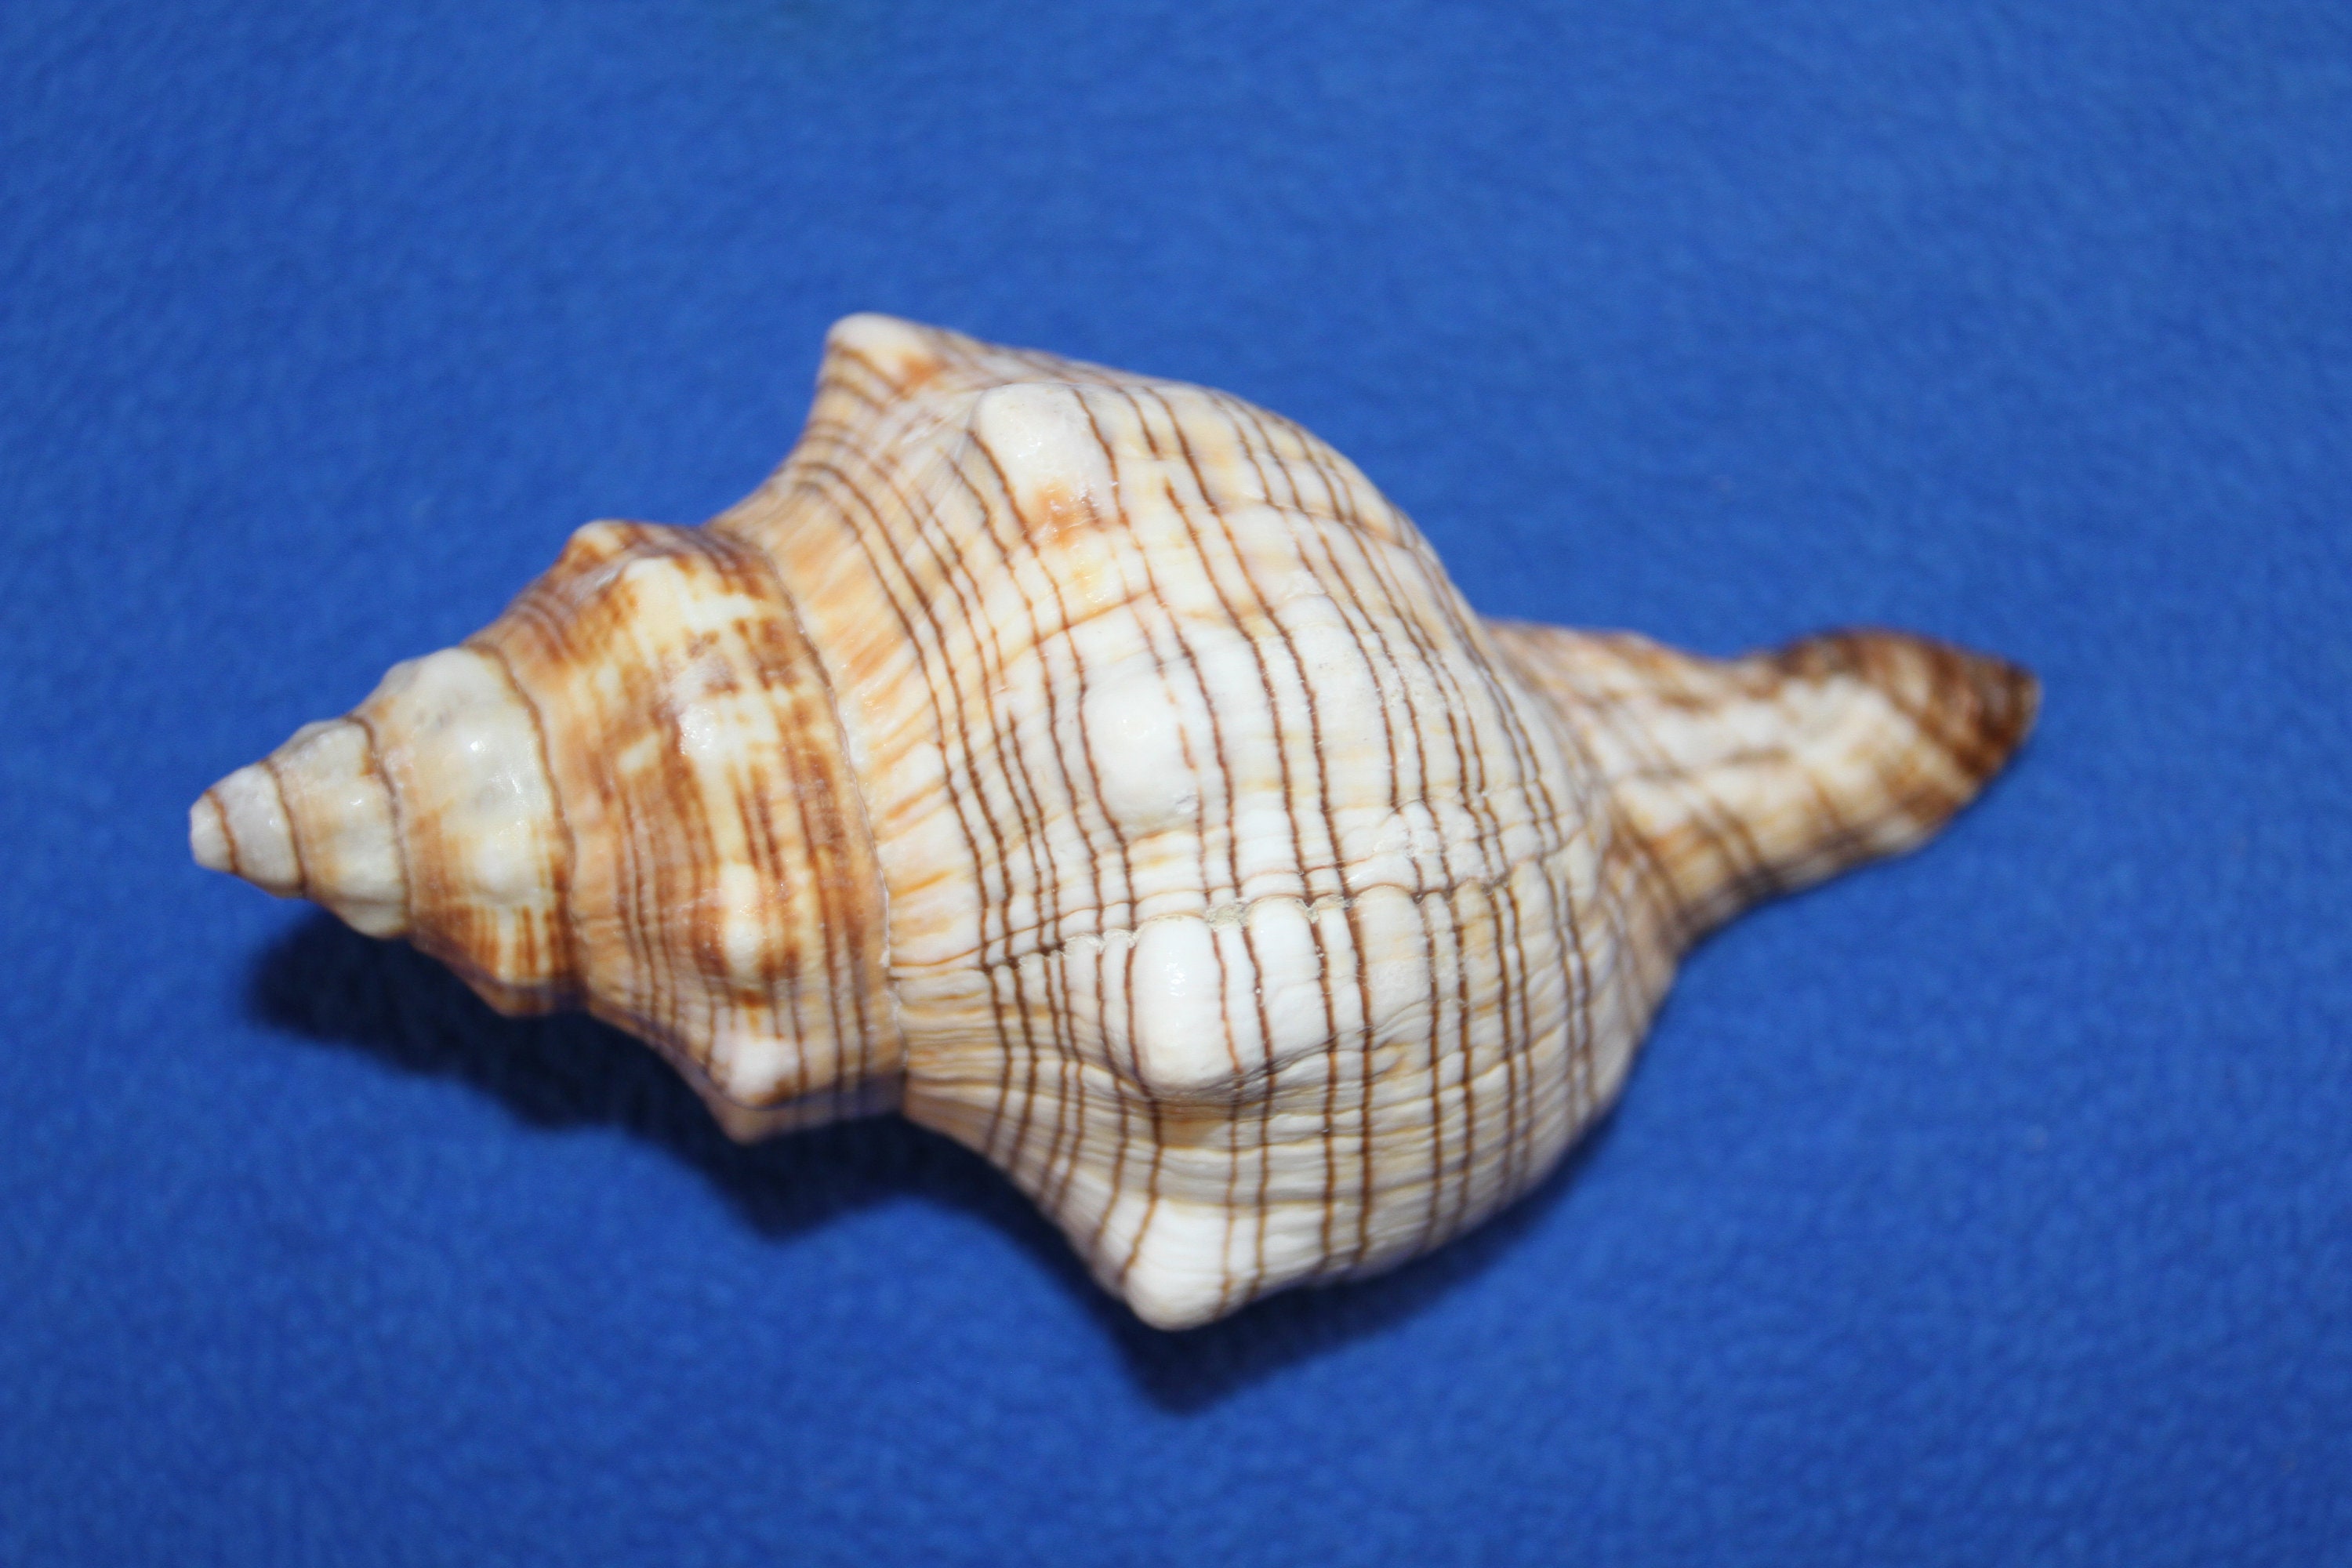 Small Shells, Small Seashells, Small Sea Shells, Sea Shells for Crafts,  Seashells Art, Tiny Shells, Shells for Sale, Beach Shells 